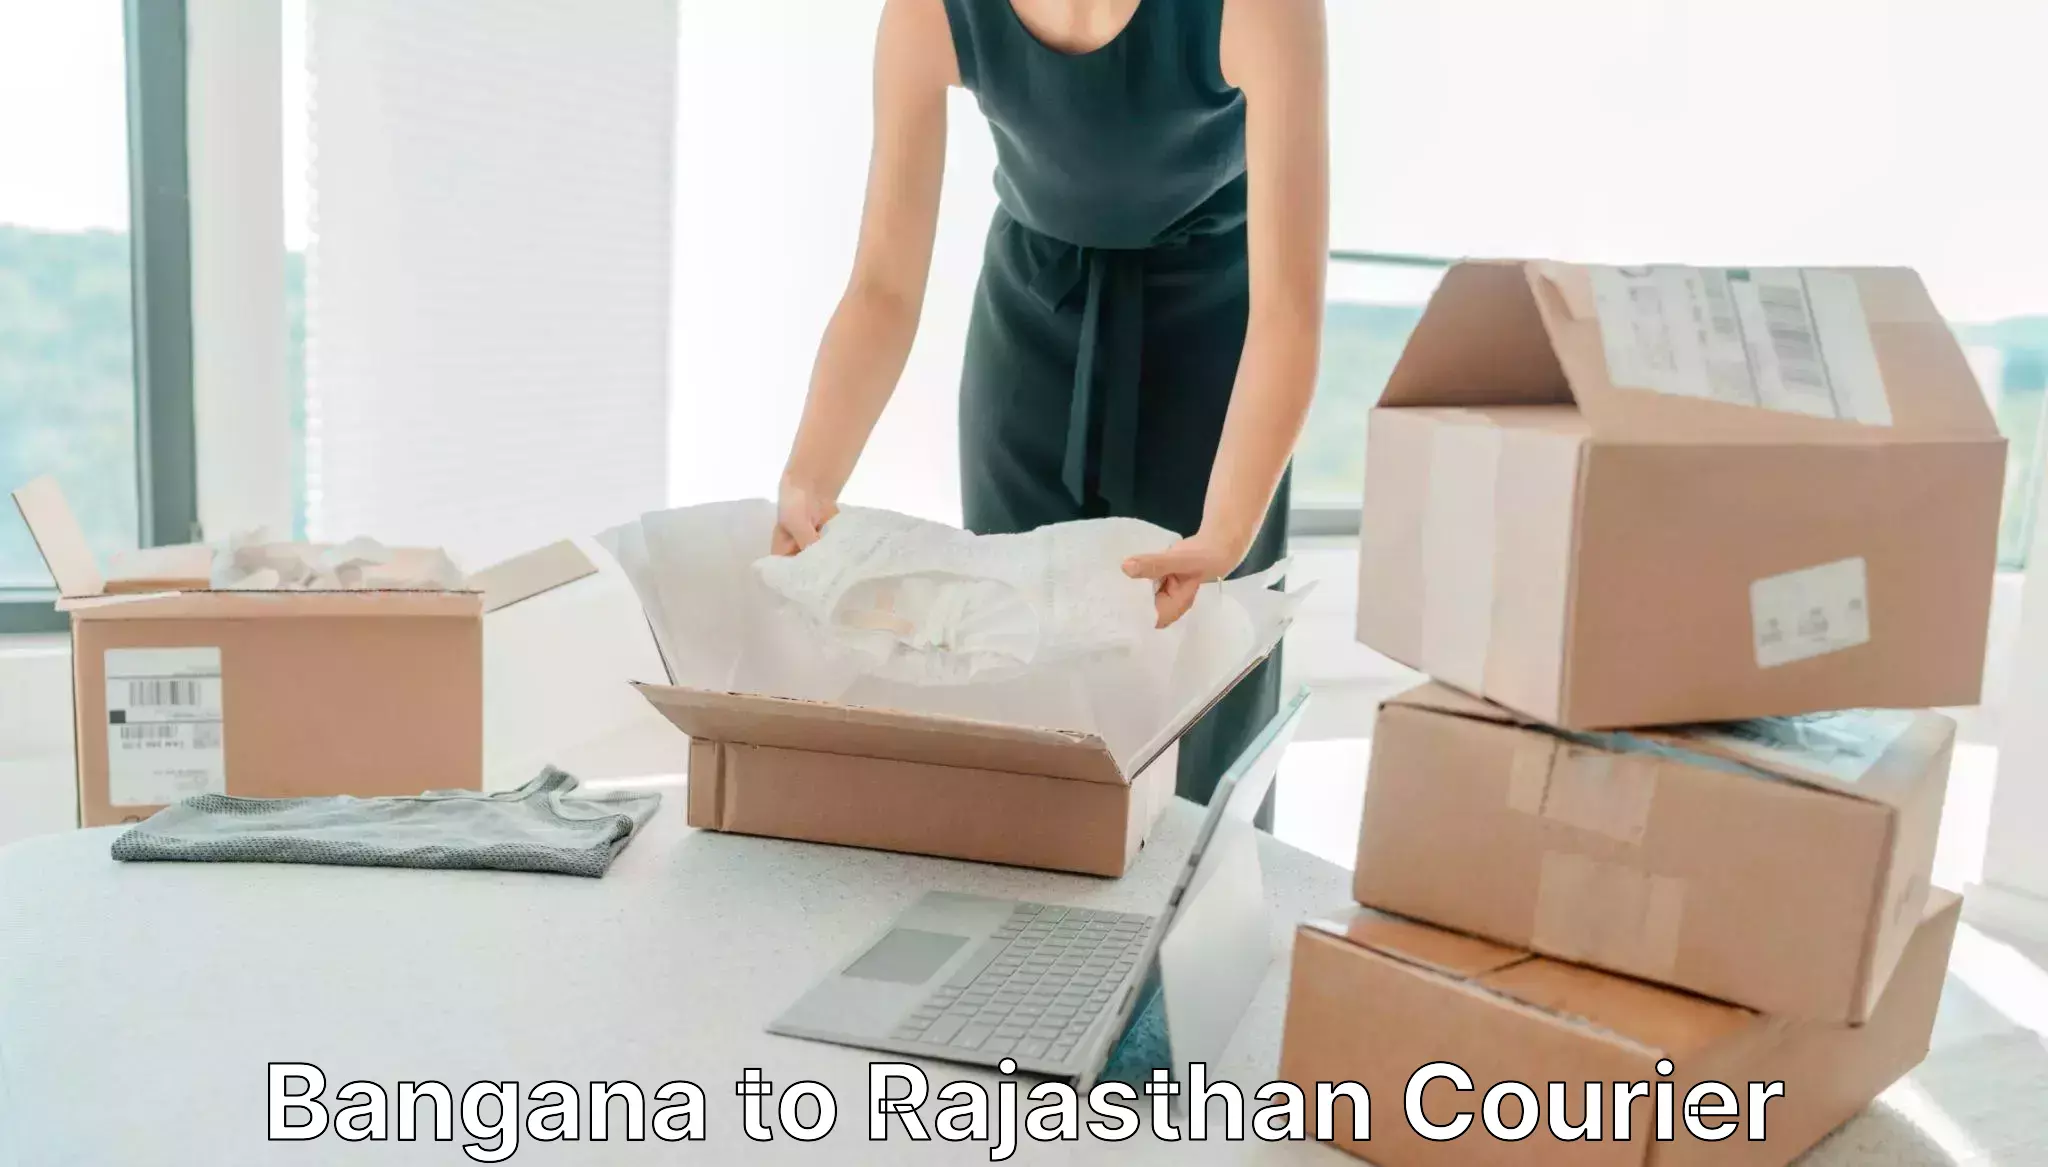 Digital courier platforms Bangana to Viratnagar